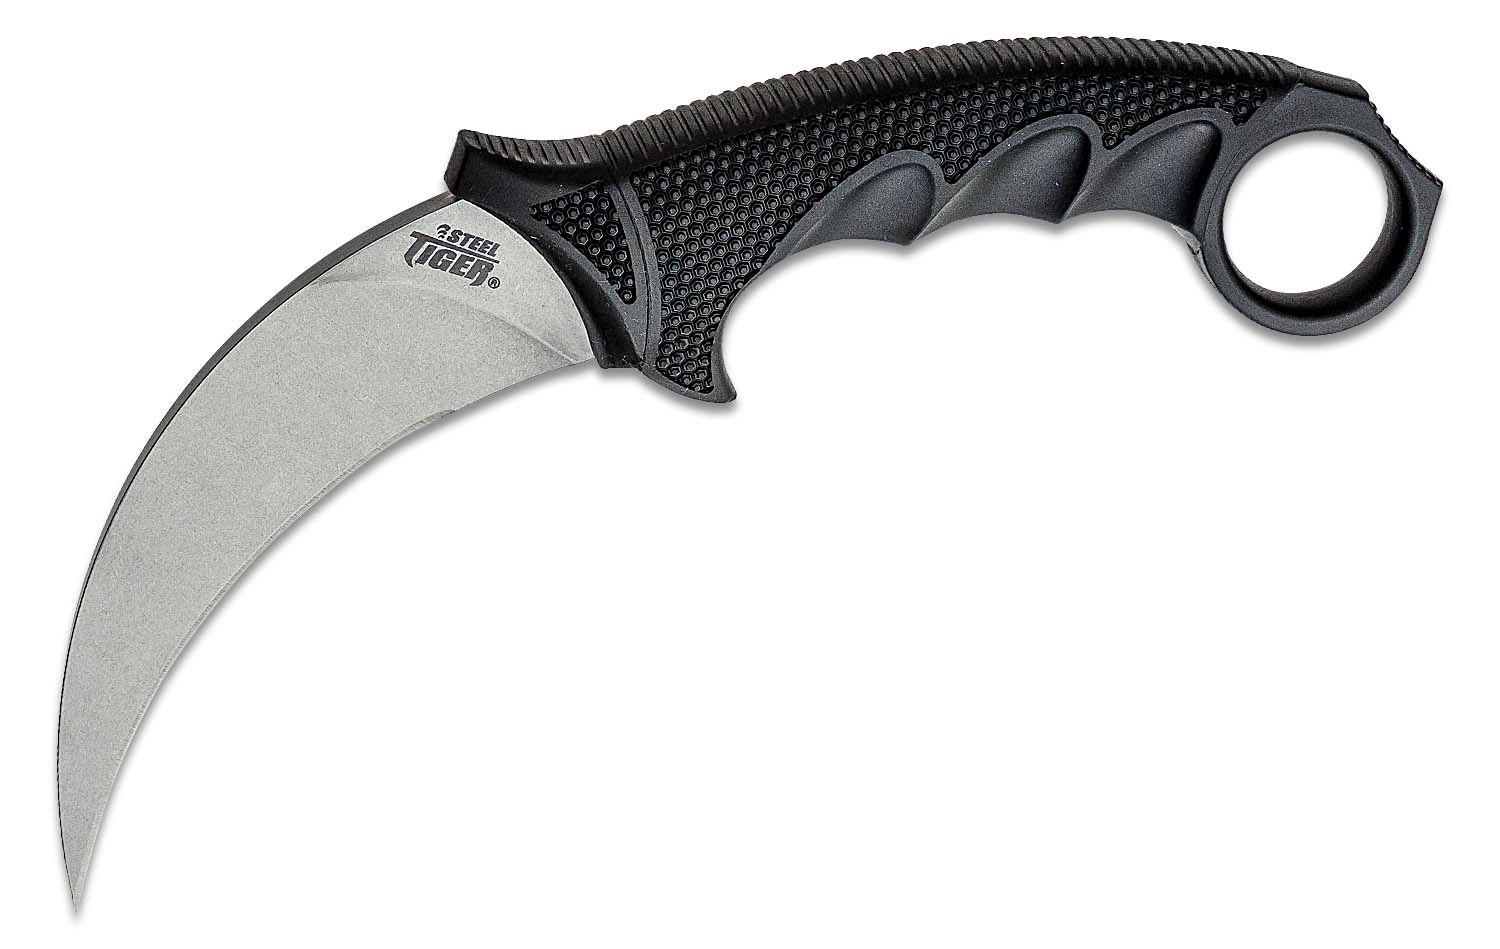  Karambit Knife Set of 2, Stainless Steel Fixed Blade